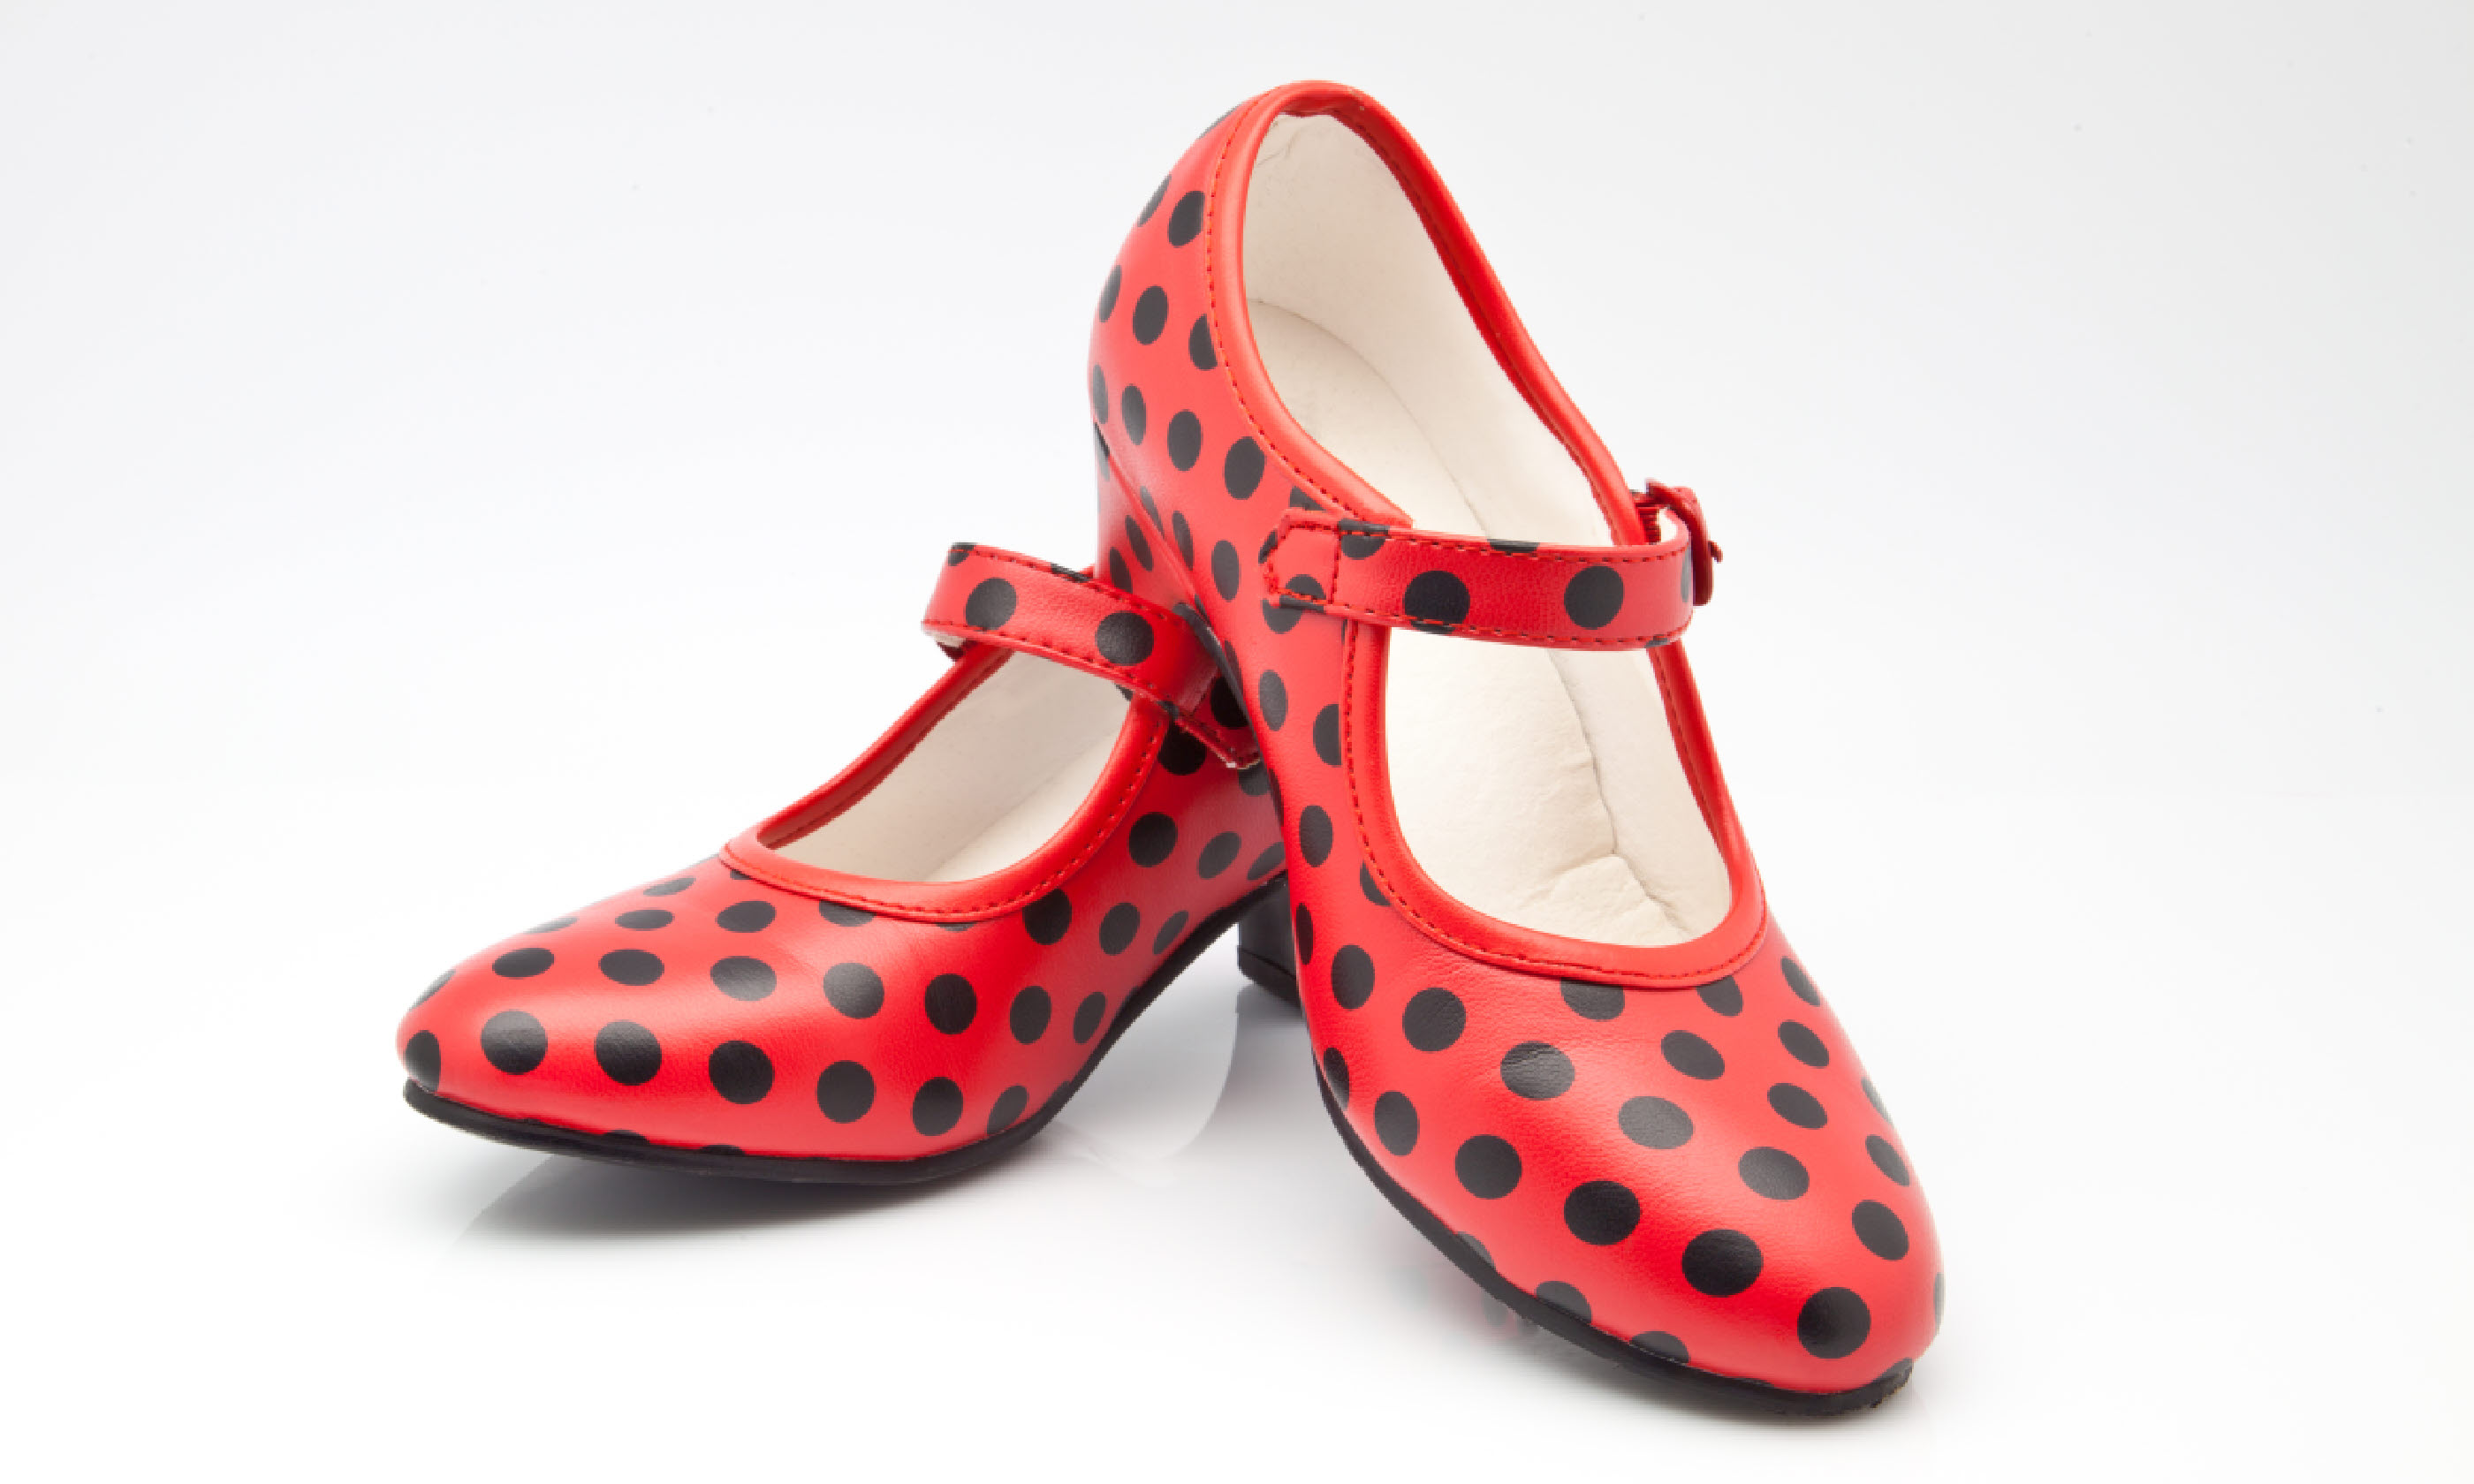 Polka dot shoes (Shutterstock)